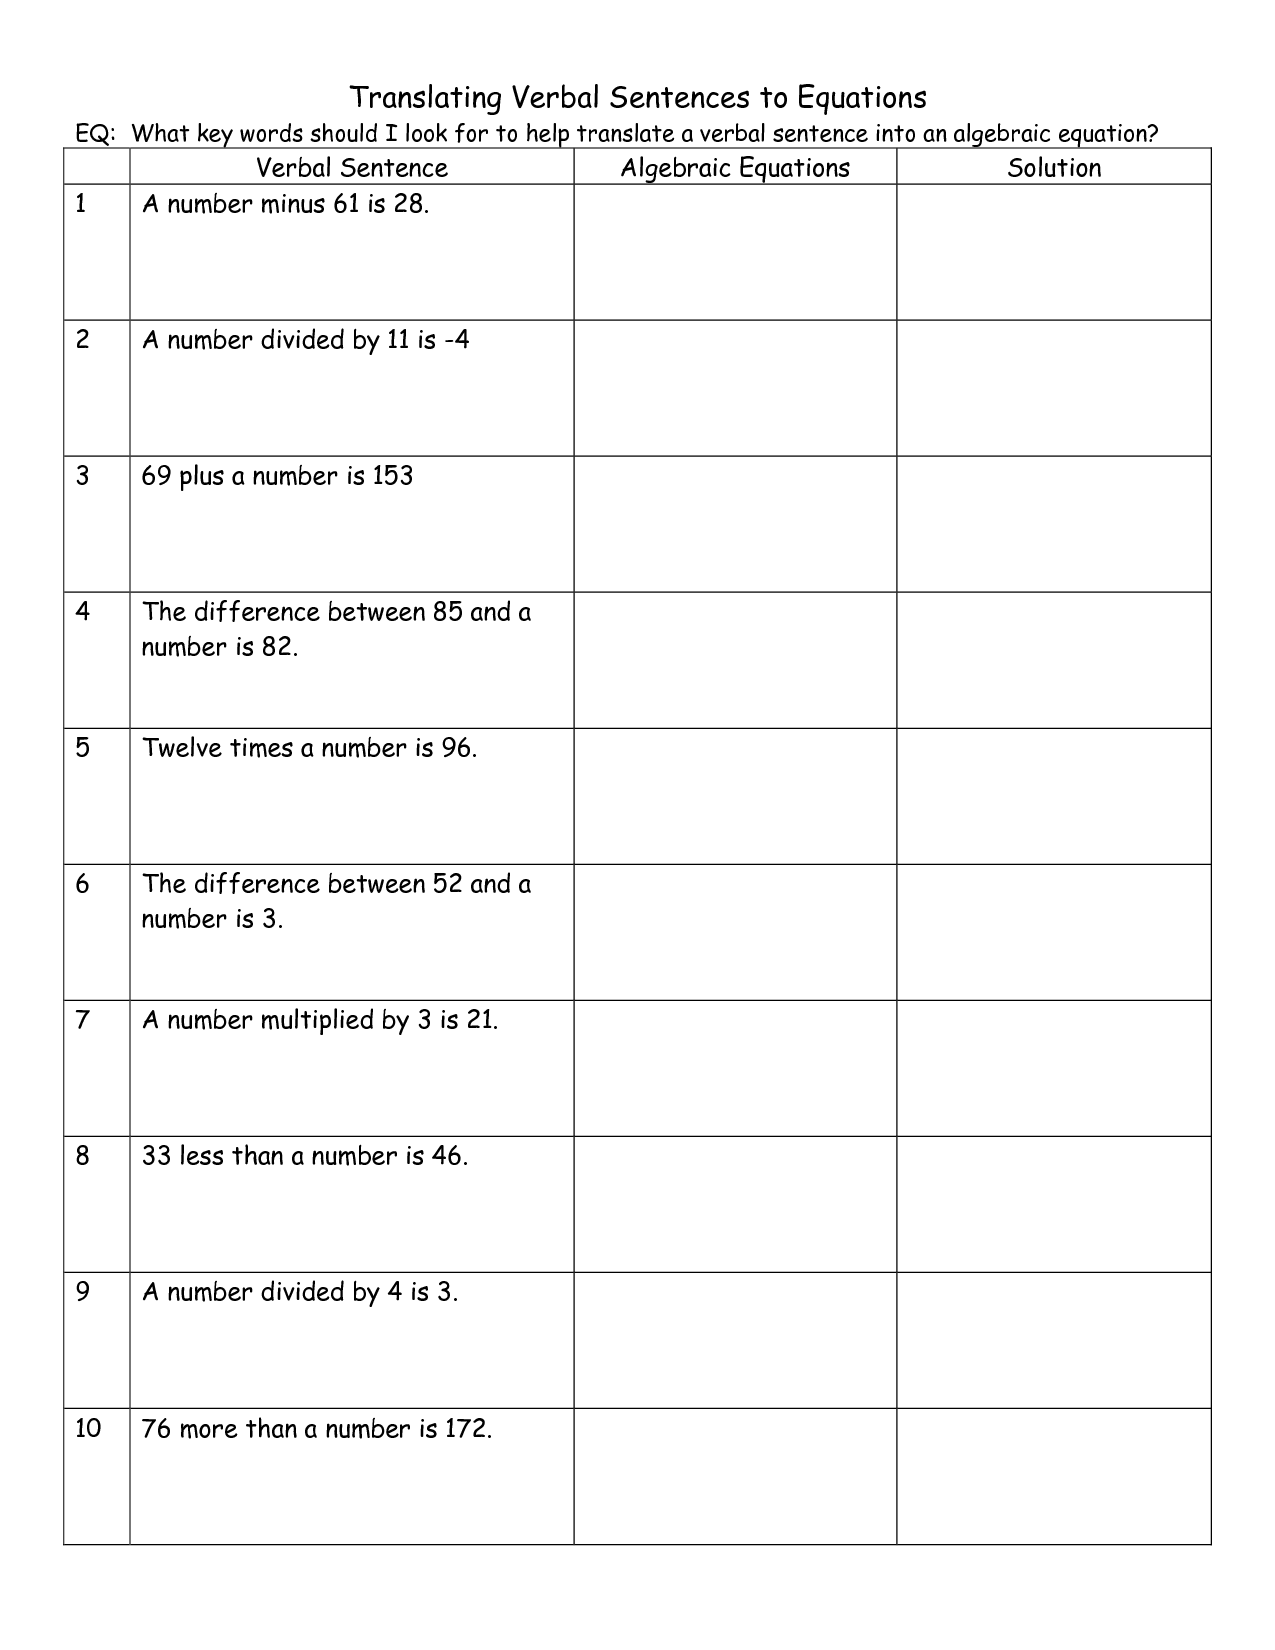 Translating Sentences Into Equations Worksheet Answers